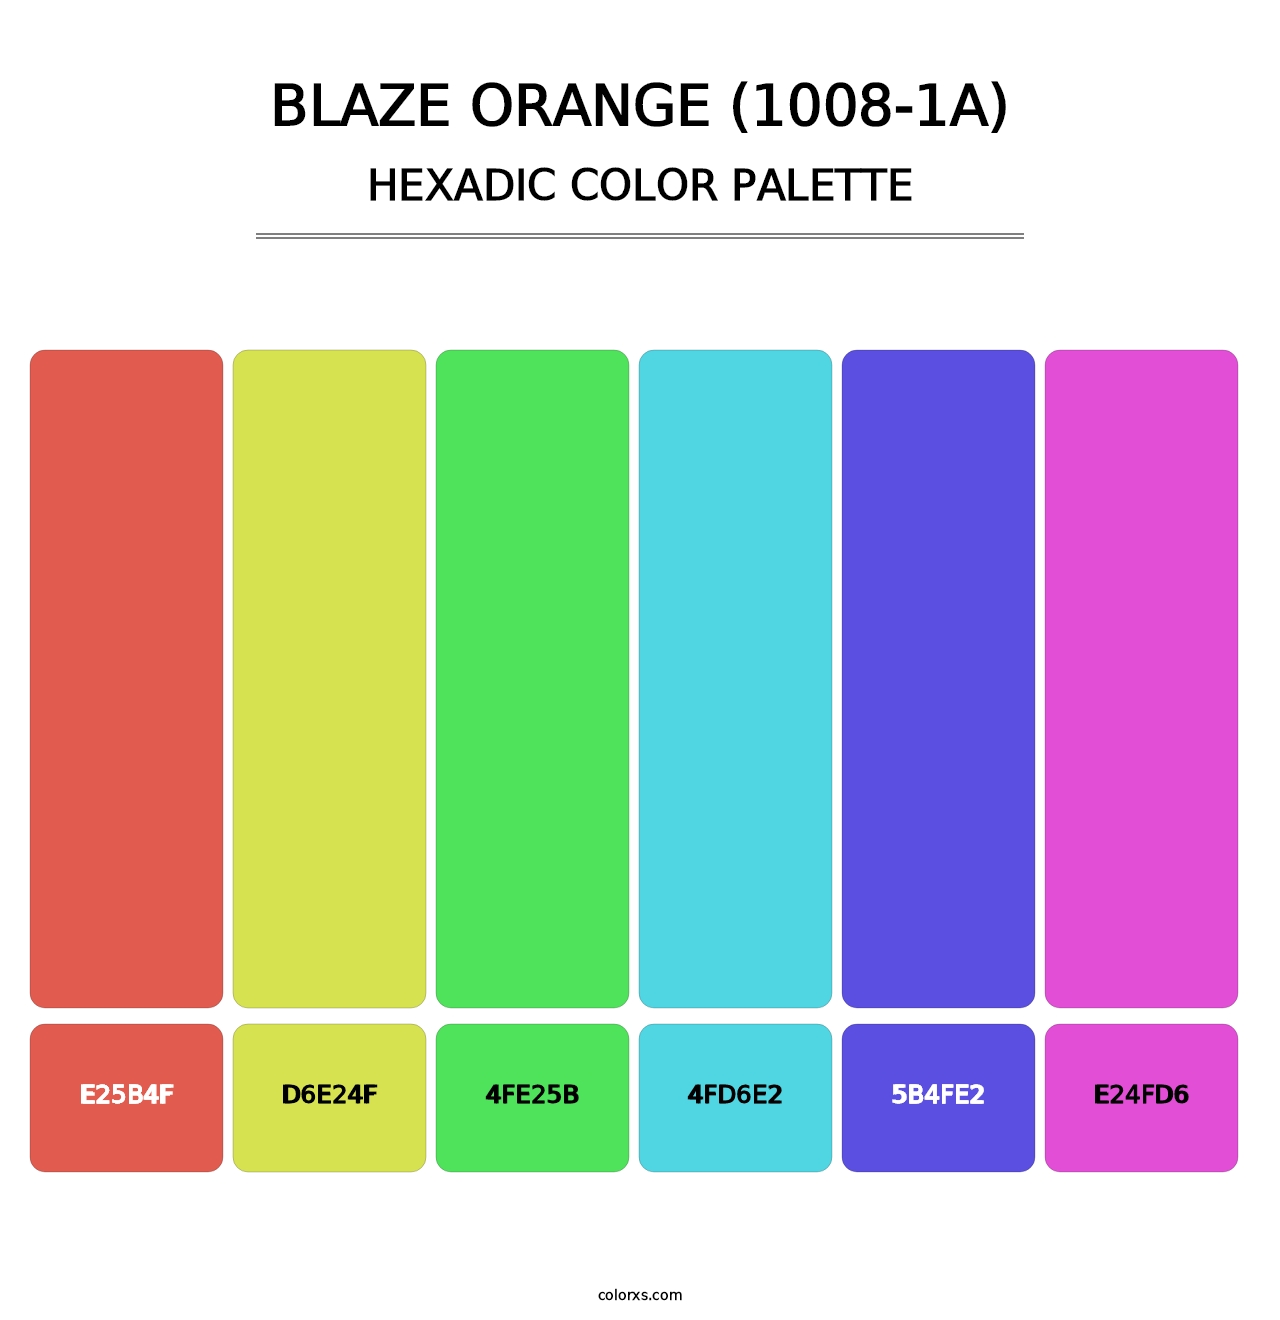 Blaze Orange (1008-1A) - Hexadic Color Palette